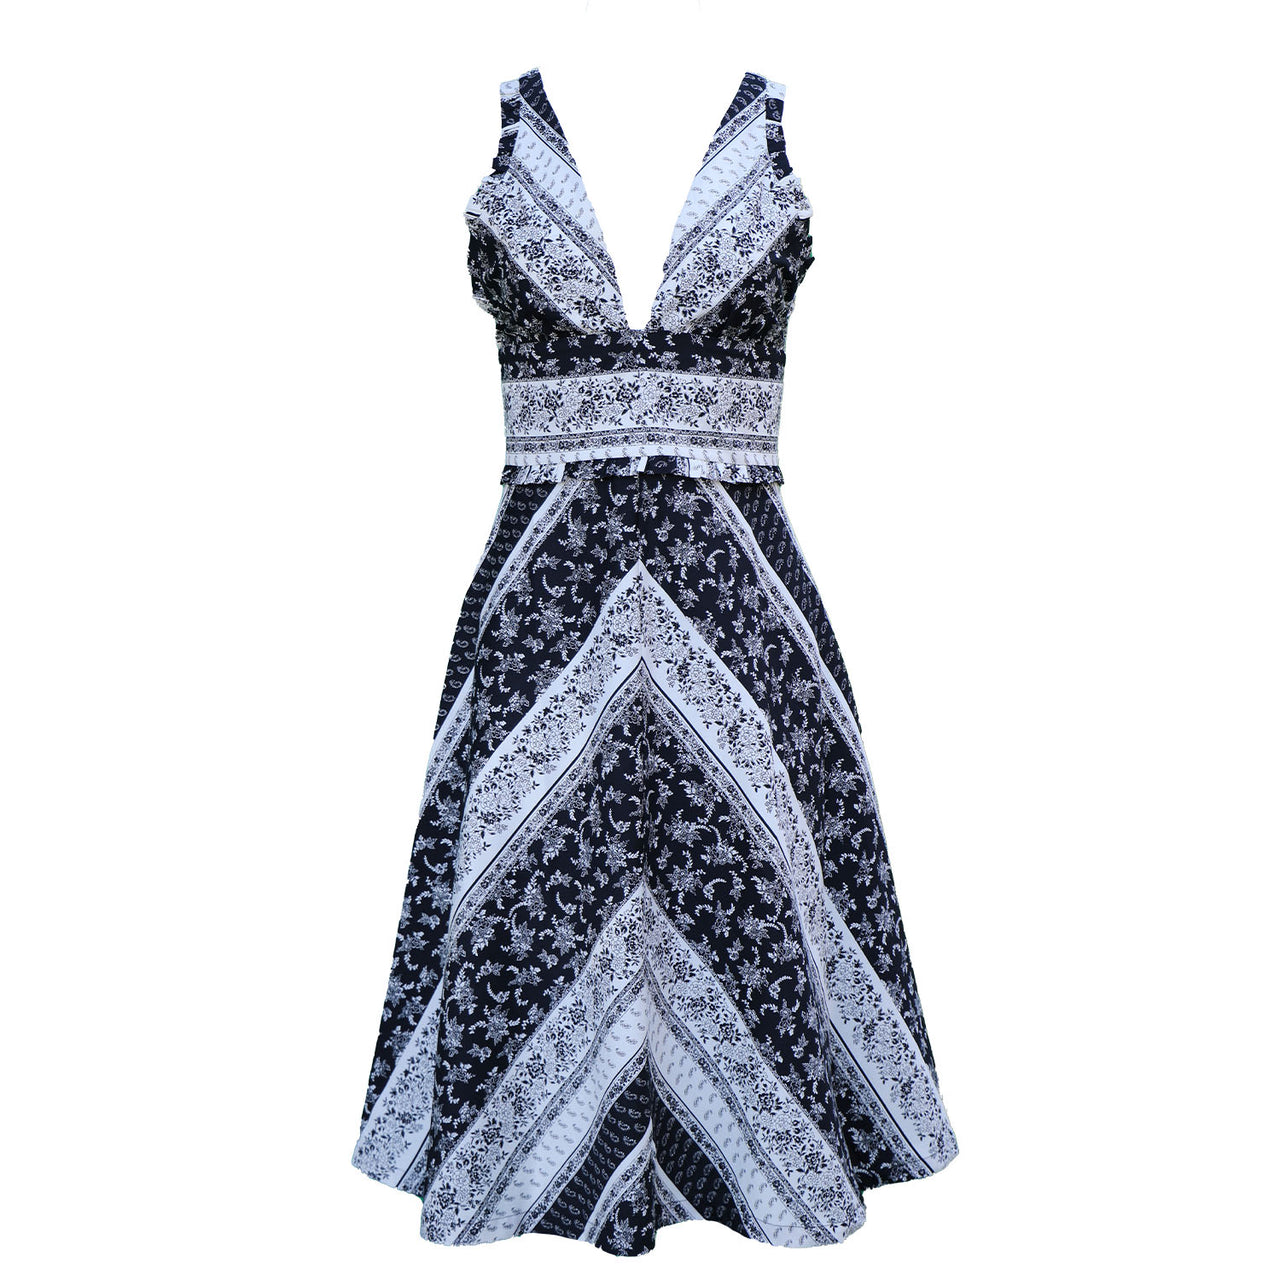 Freya Halter Dress / Black & Milky White Floral Stripe Cotton